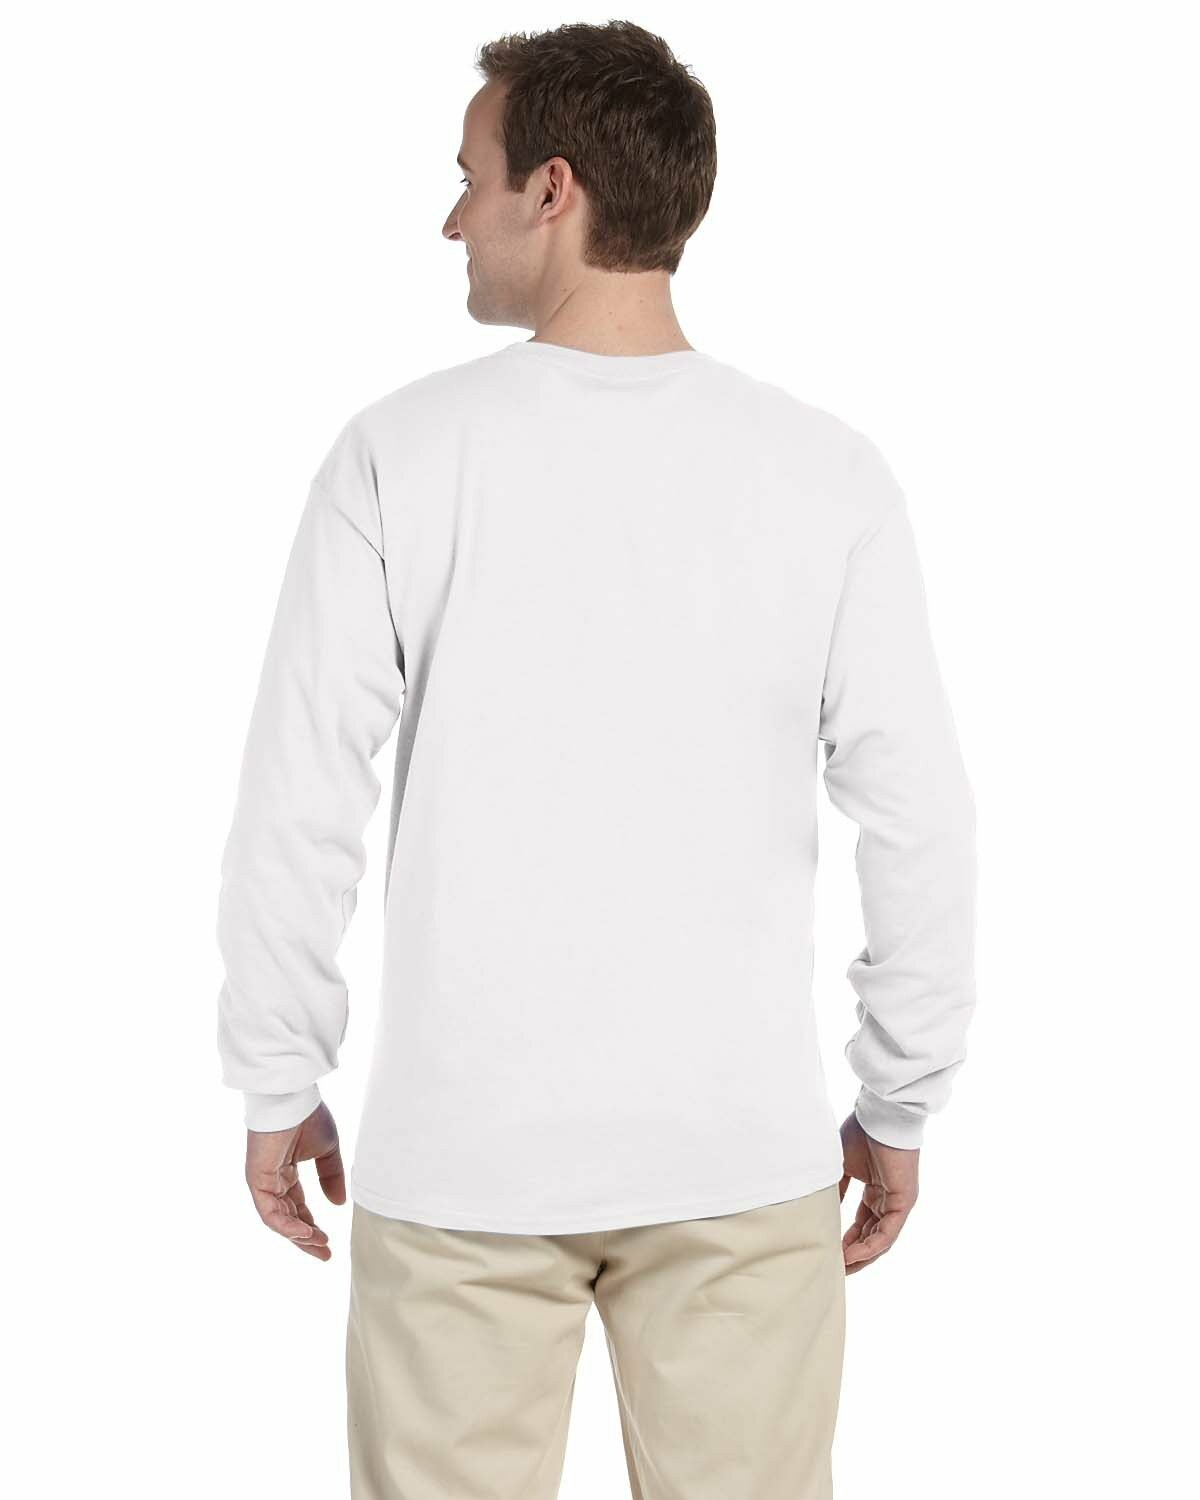 Sweatshirt for Men's 100% Cotton Crewneck Long Sleeve Heavyweight Regular  Fit Pullover Warm Plain Top